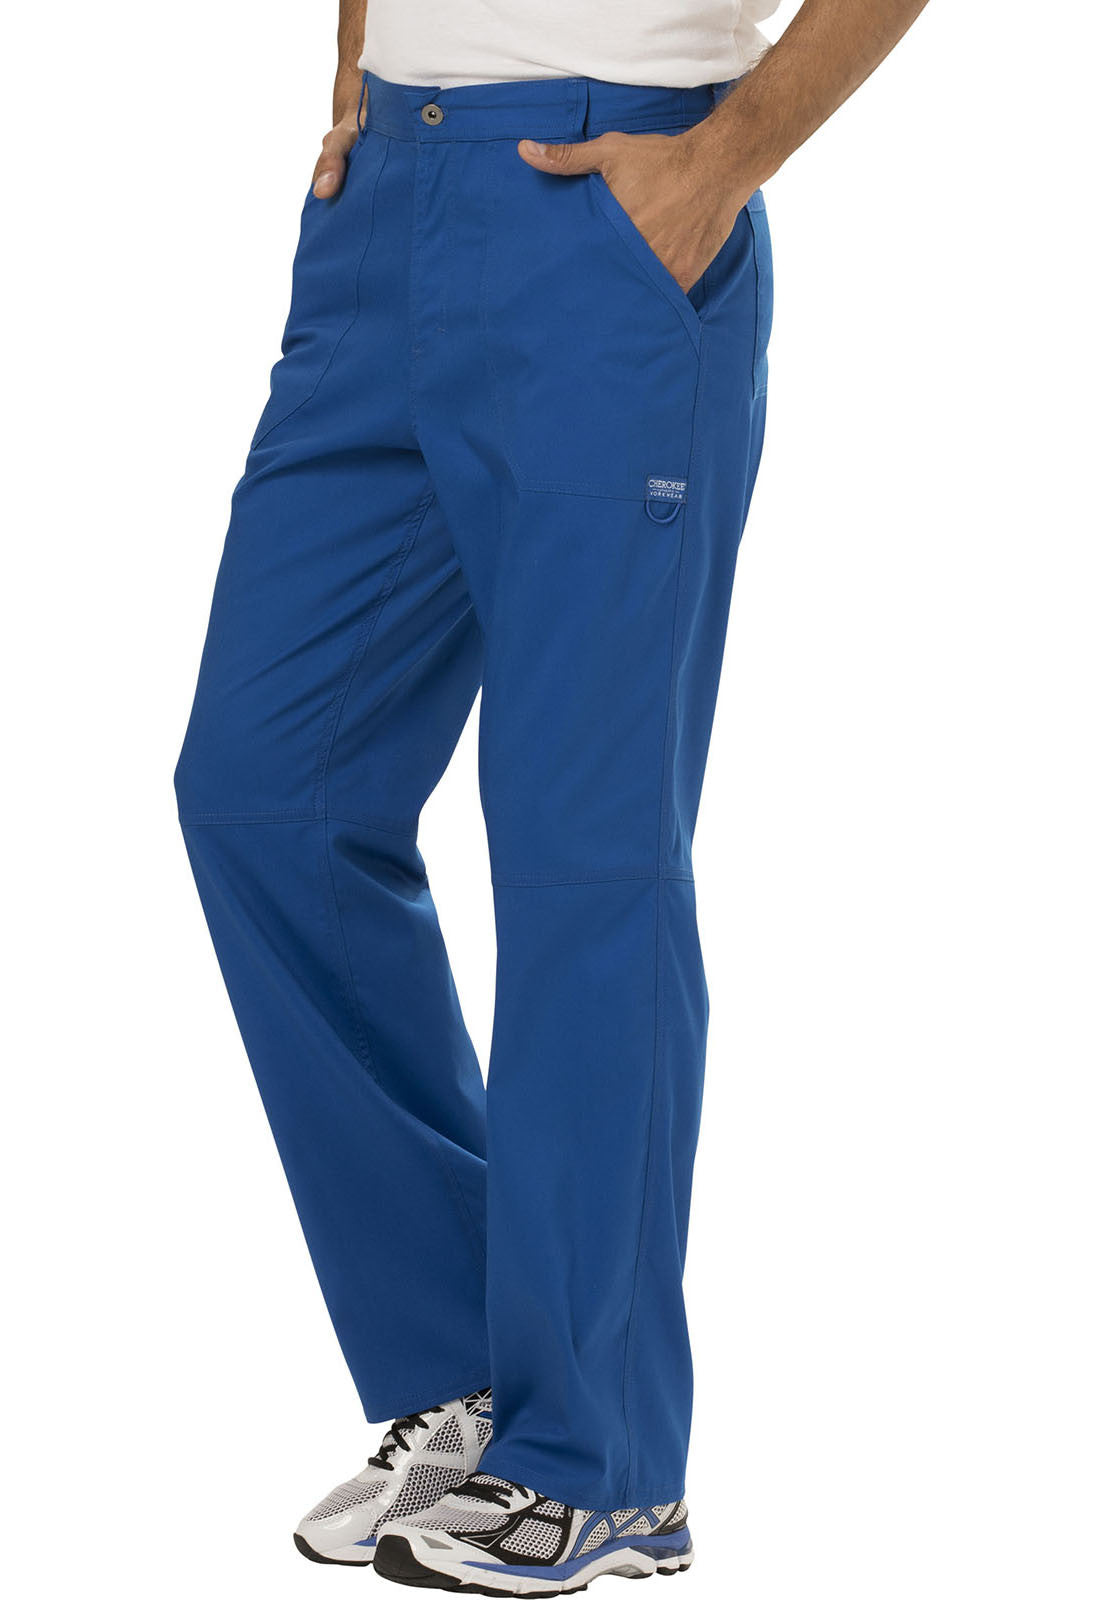 Nîmes - Pantalon slim taille haute - Homme - Cherokee Cherokee Authentic Workwear